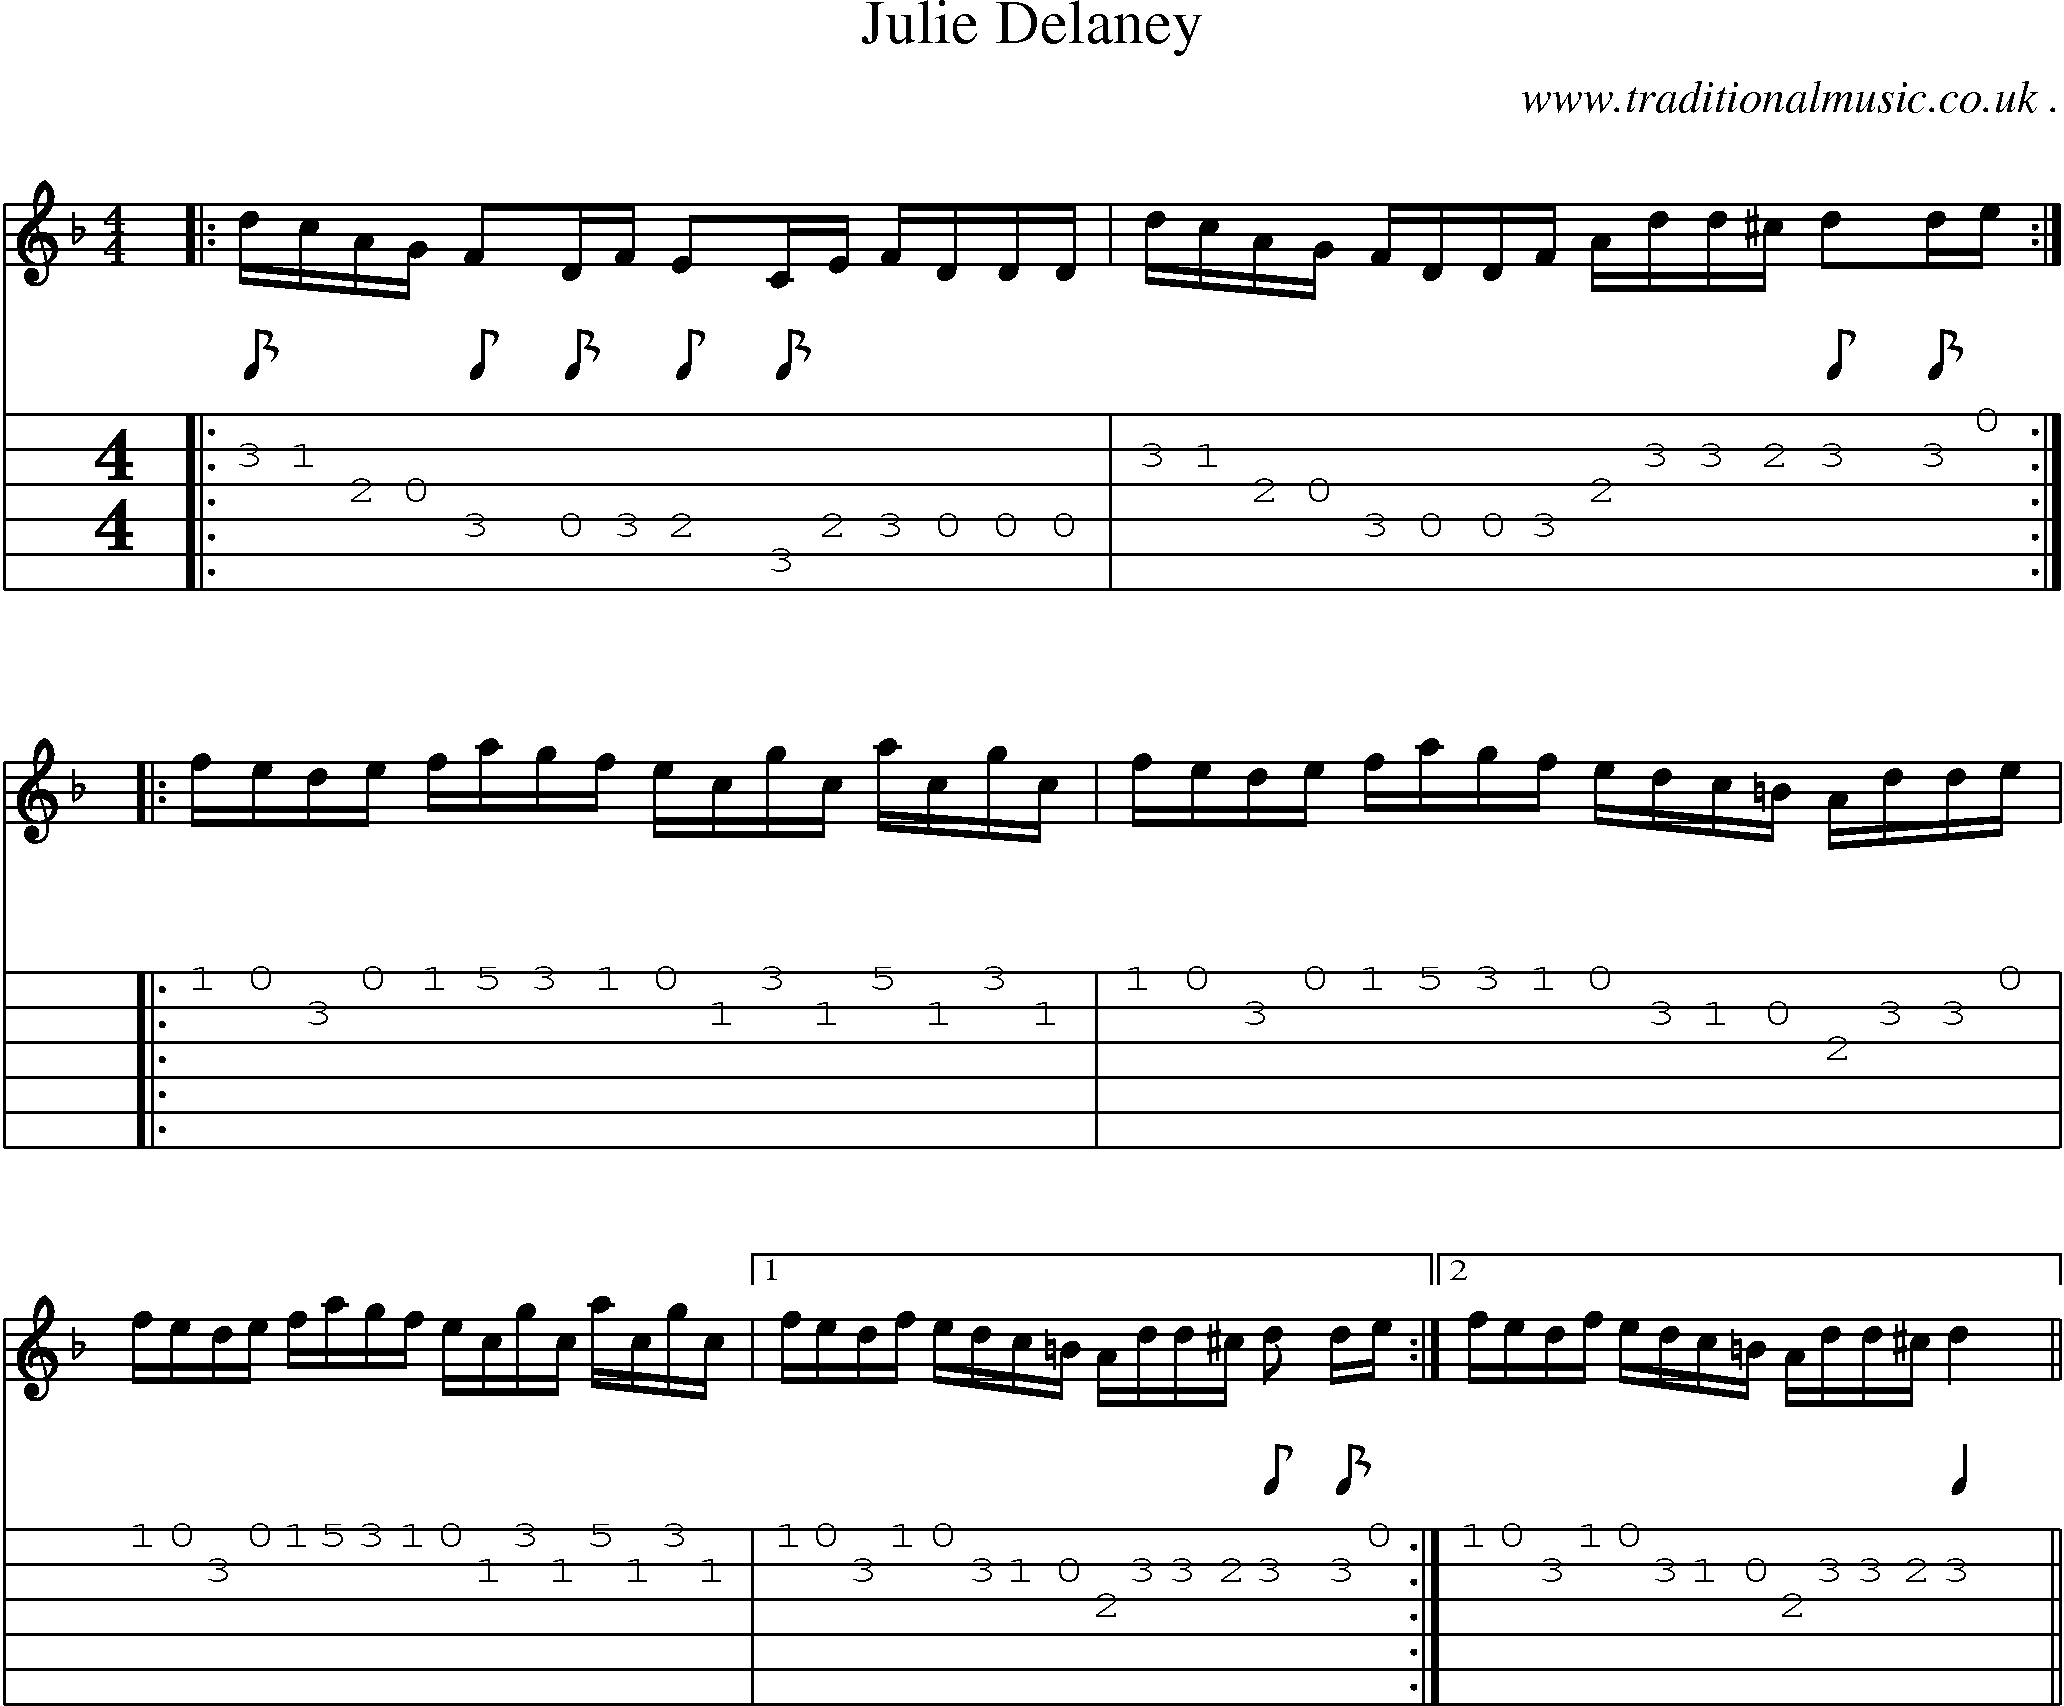 Sheet-Music and Guitar Tabs for Julie Delaney